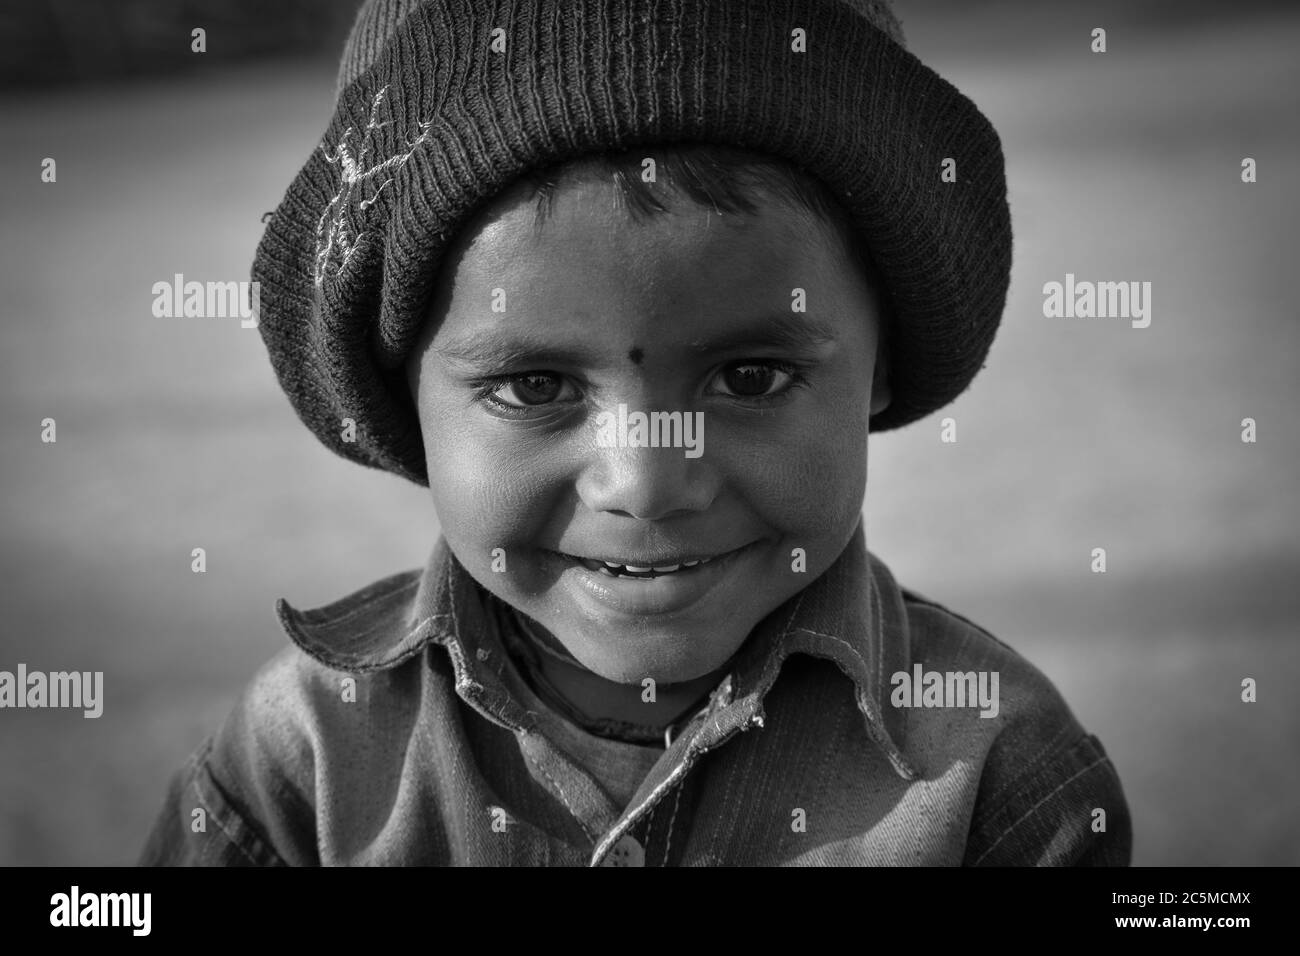 TIKAMGARH, MADHYA PRADESH, INDIA - FEBRUARY 11, 2020: Portrait of a little boy in black and white. Stock Photo